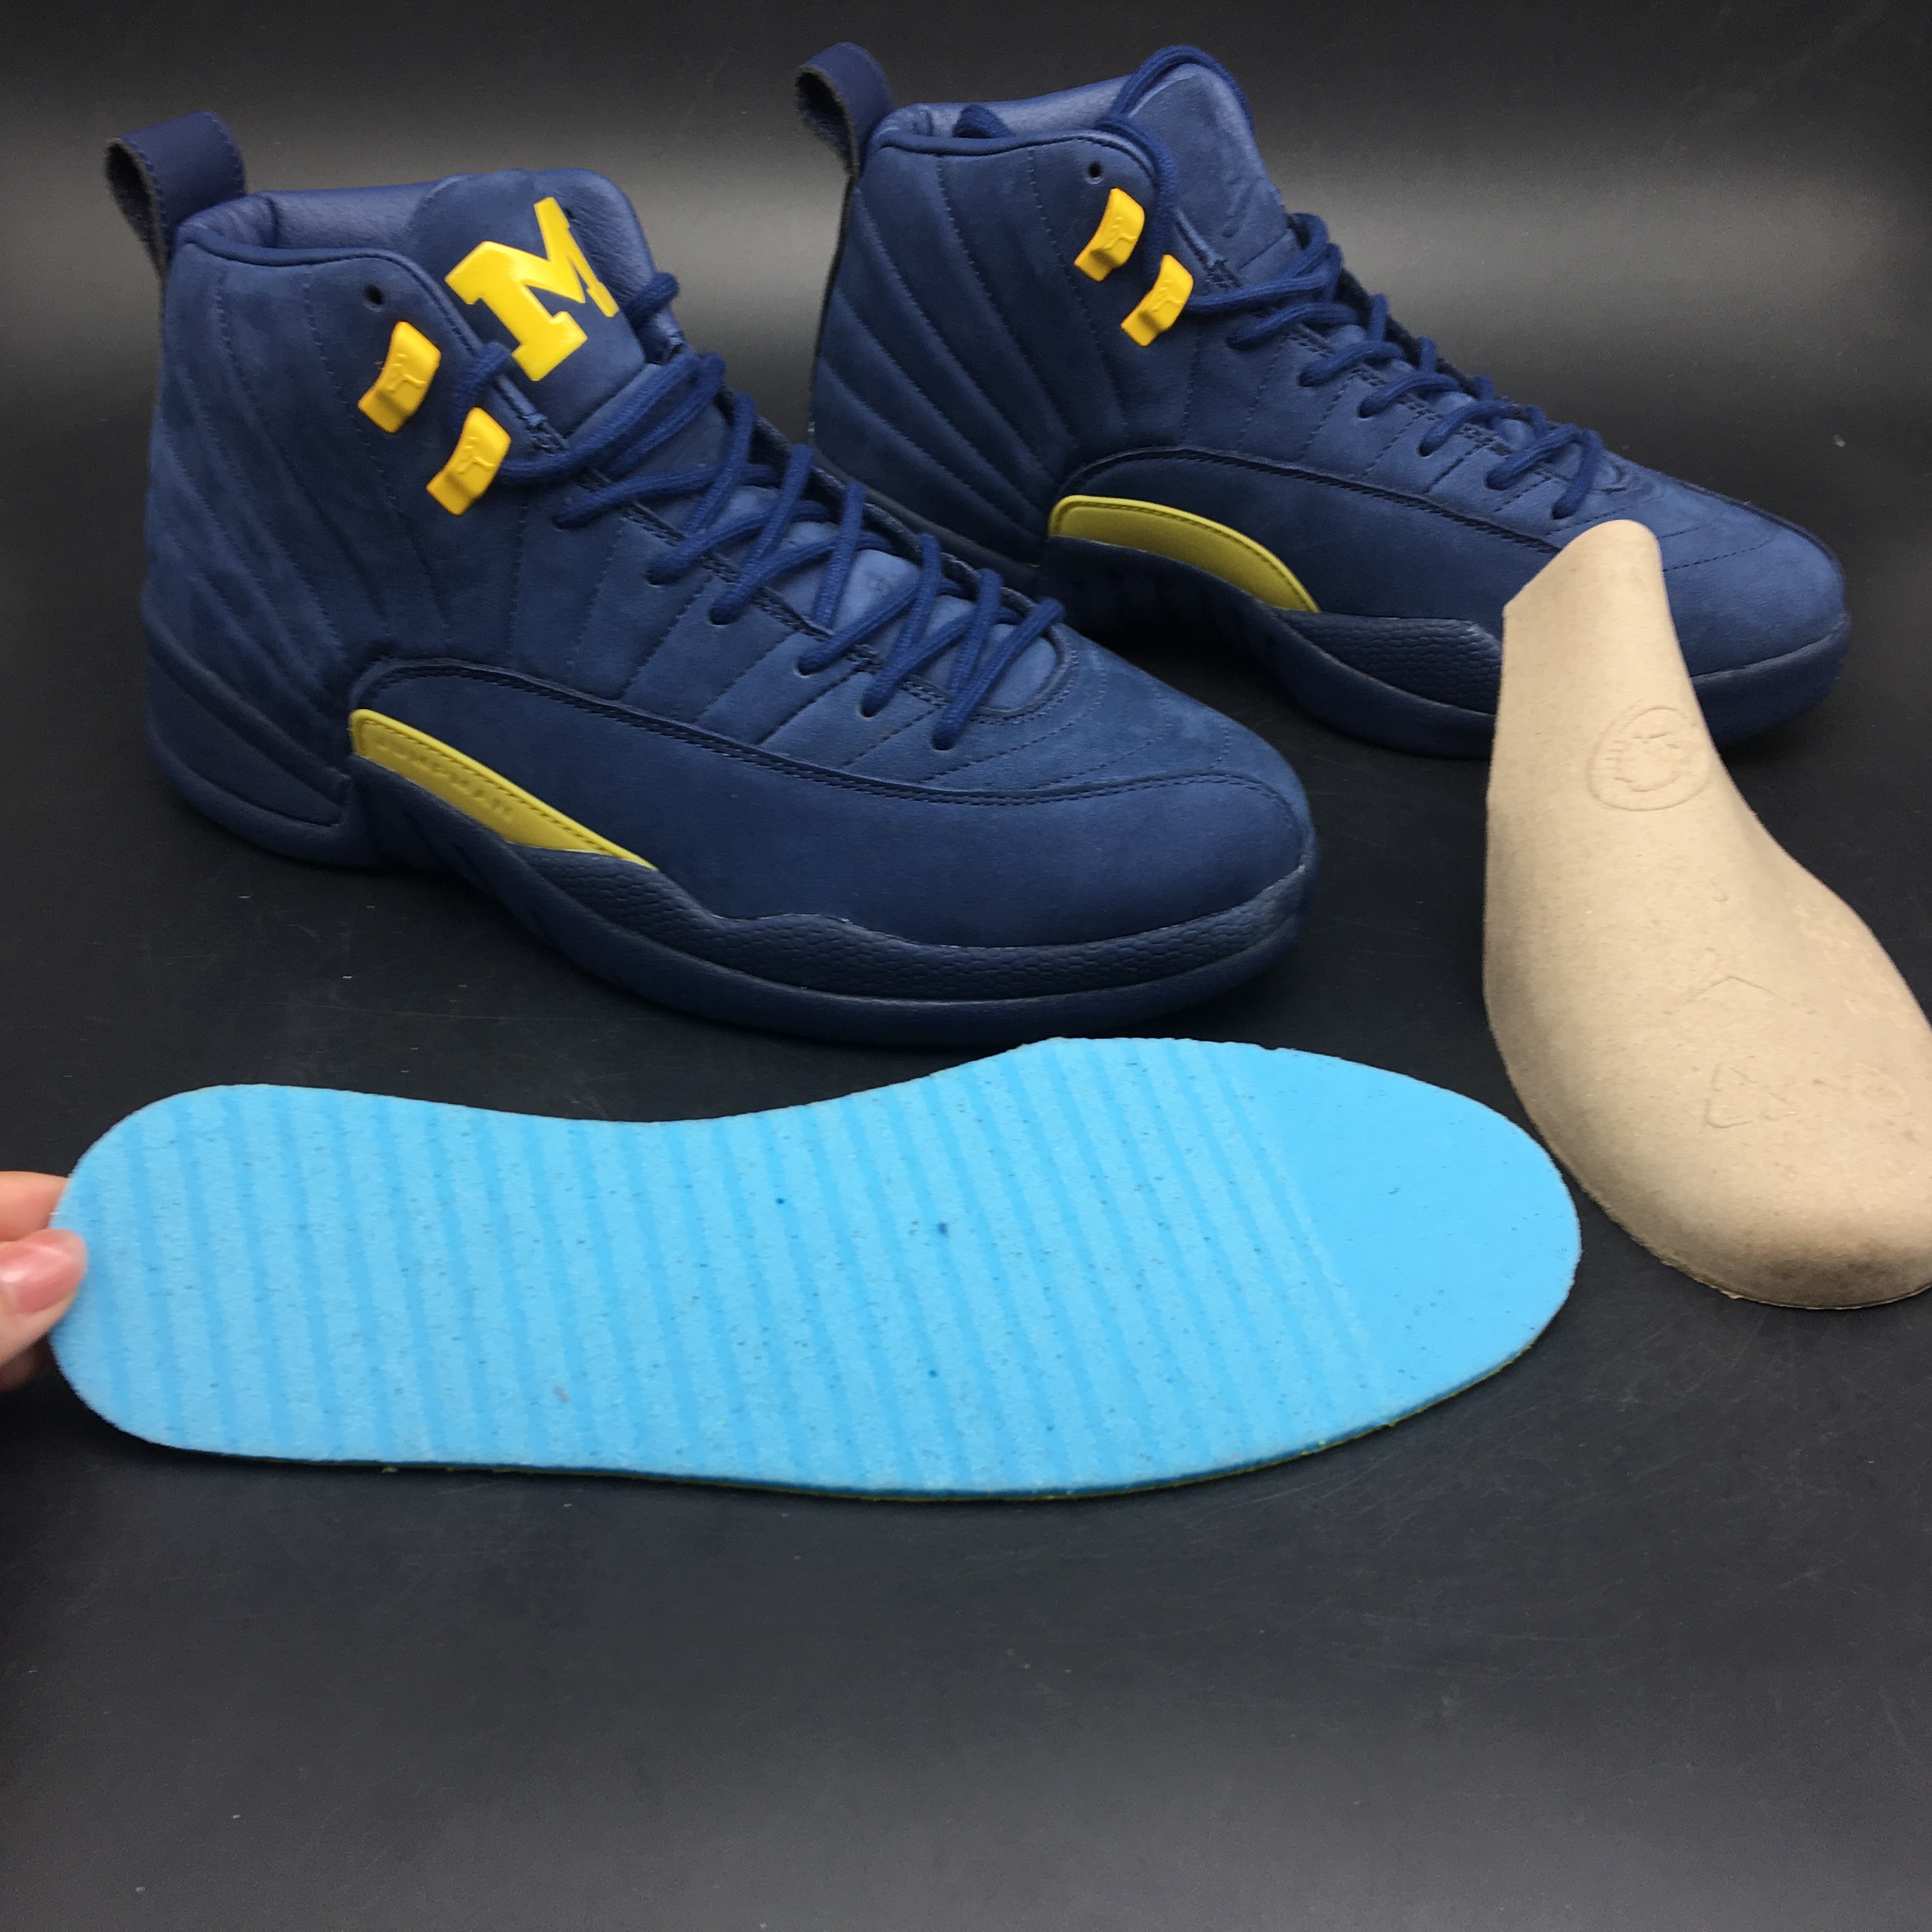 New Air Jordan 12 Michigan Blue Yellow Shoes